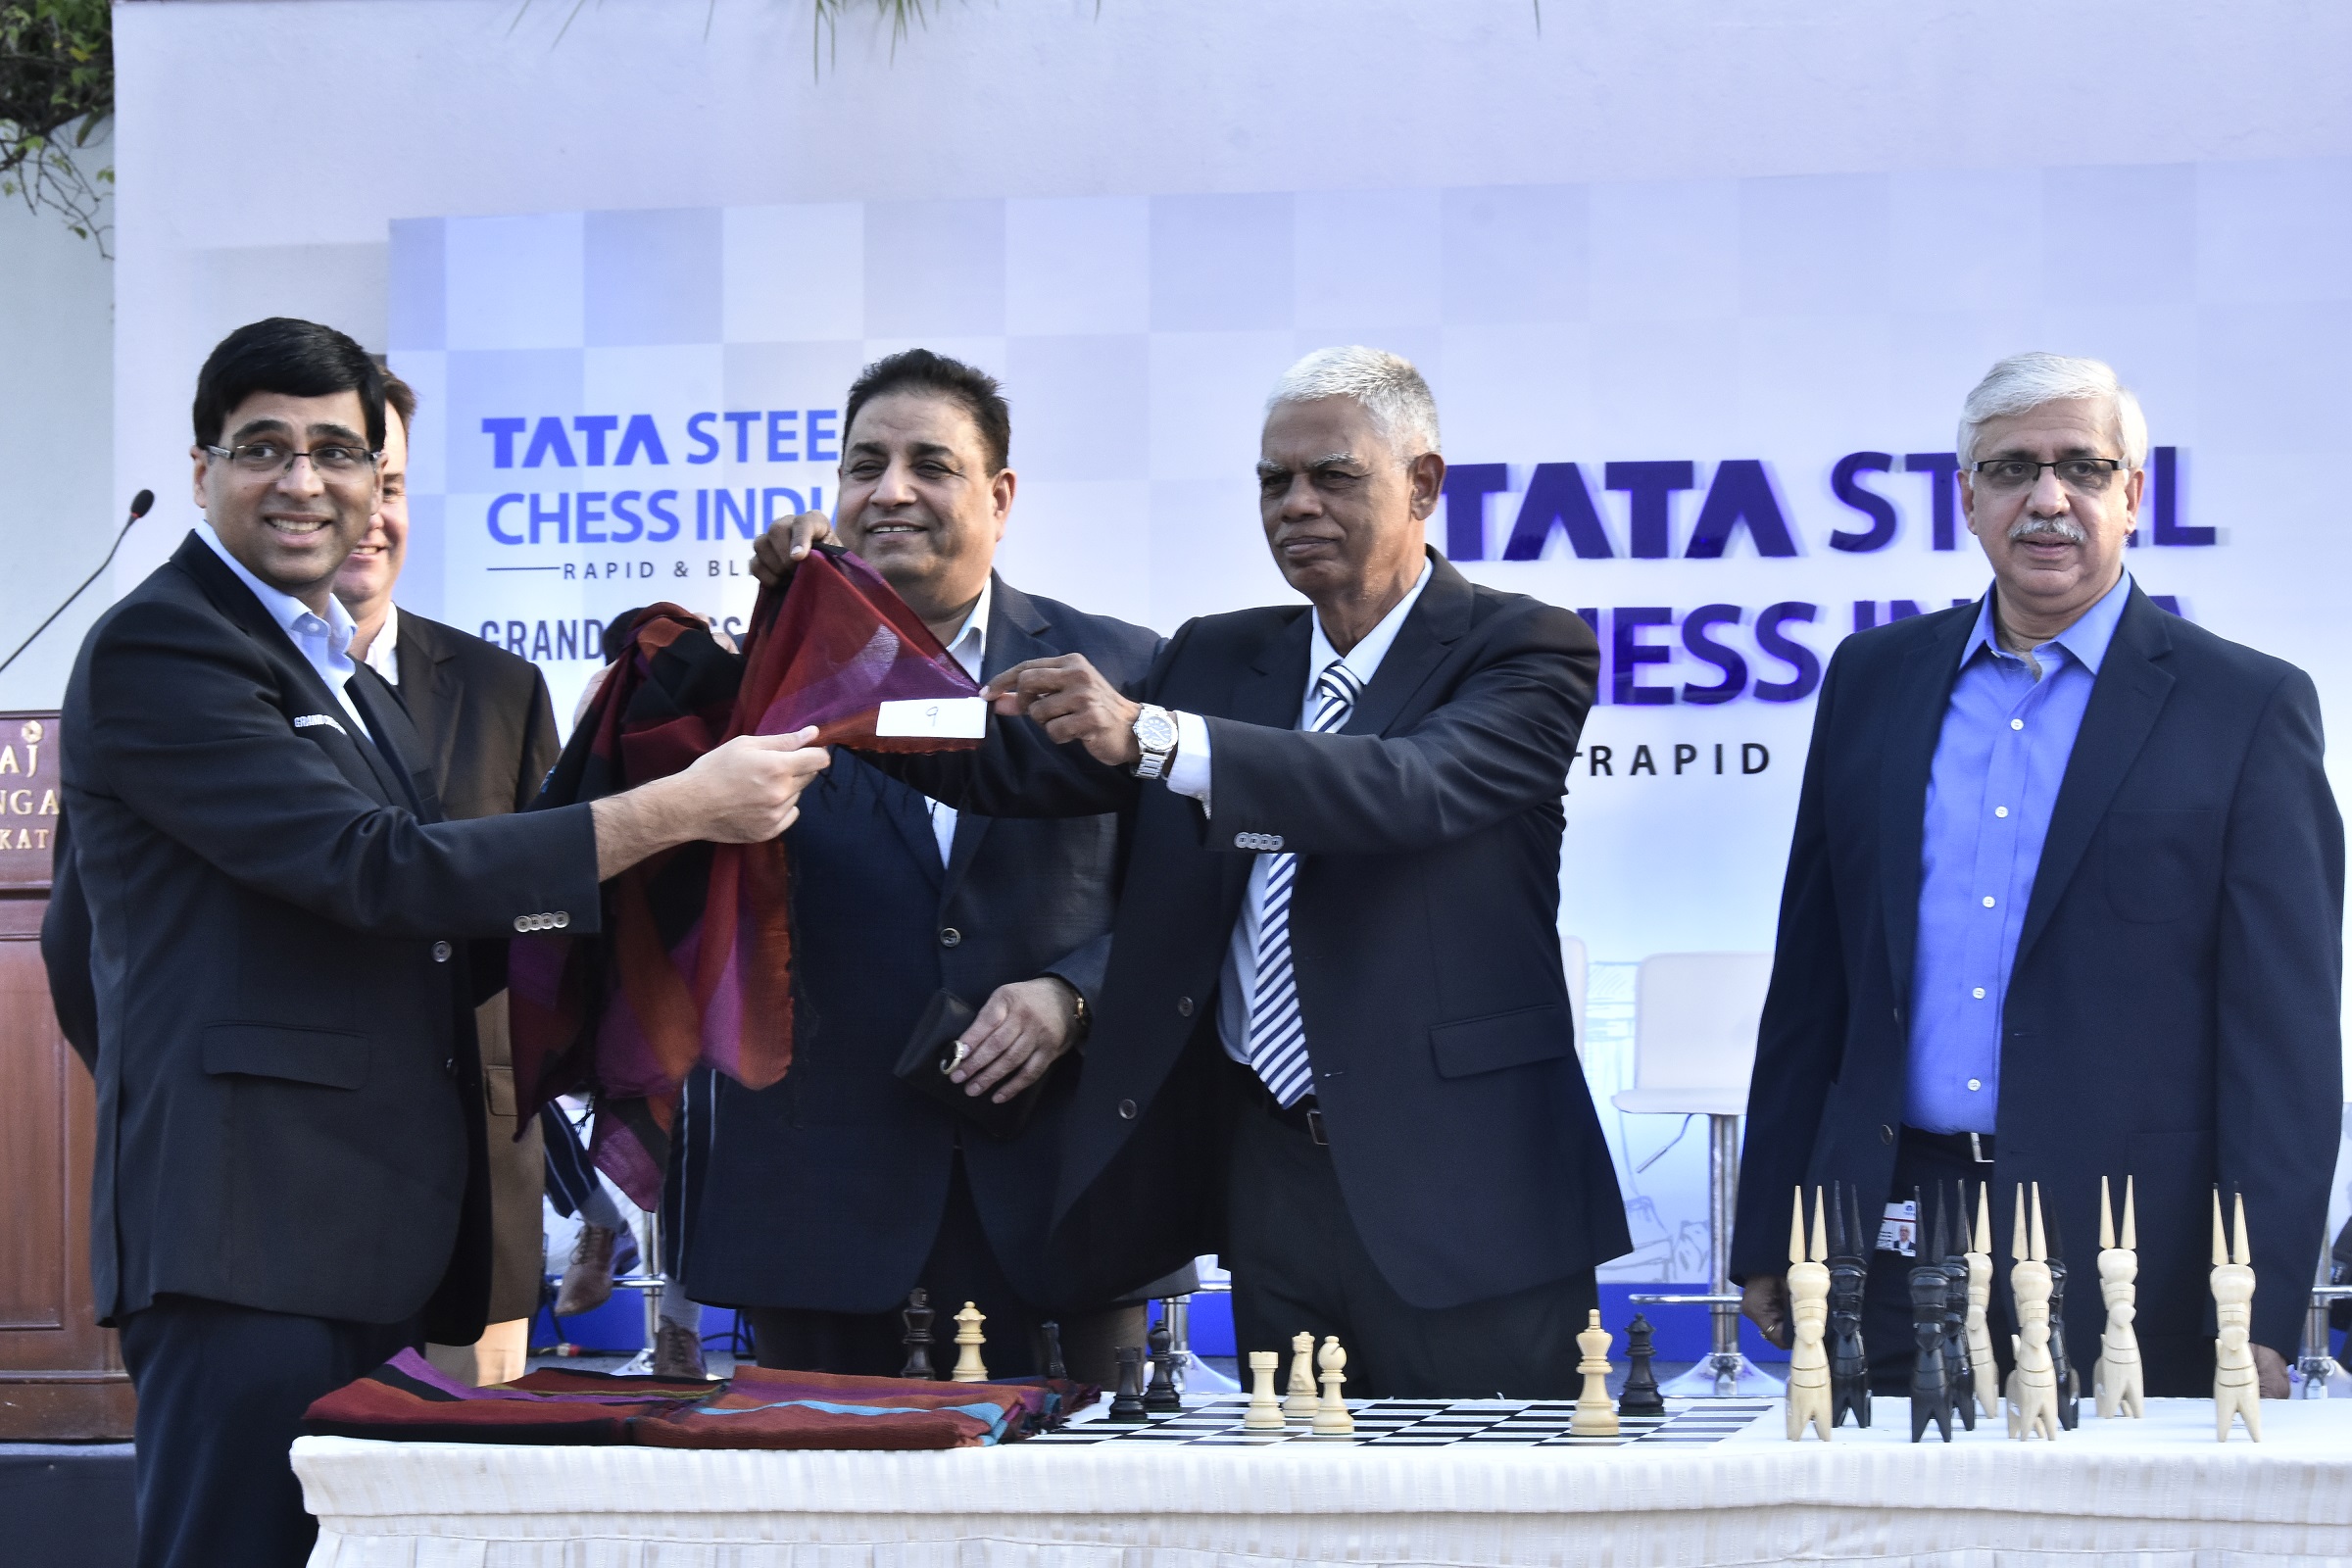 2019 Tata Steel Chess India Rapid & Blitz: Day 1 Recap